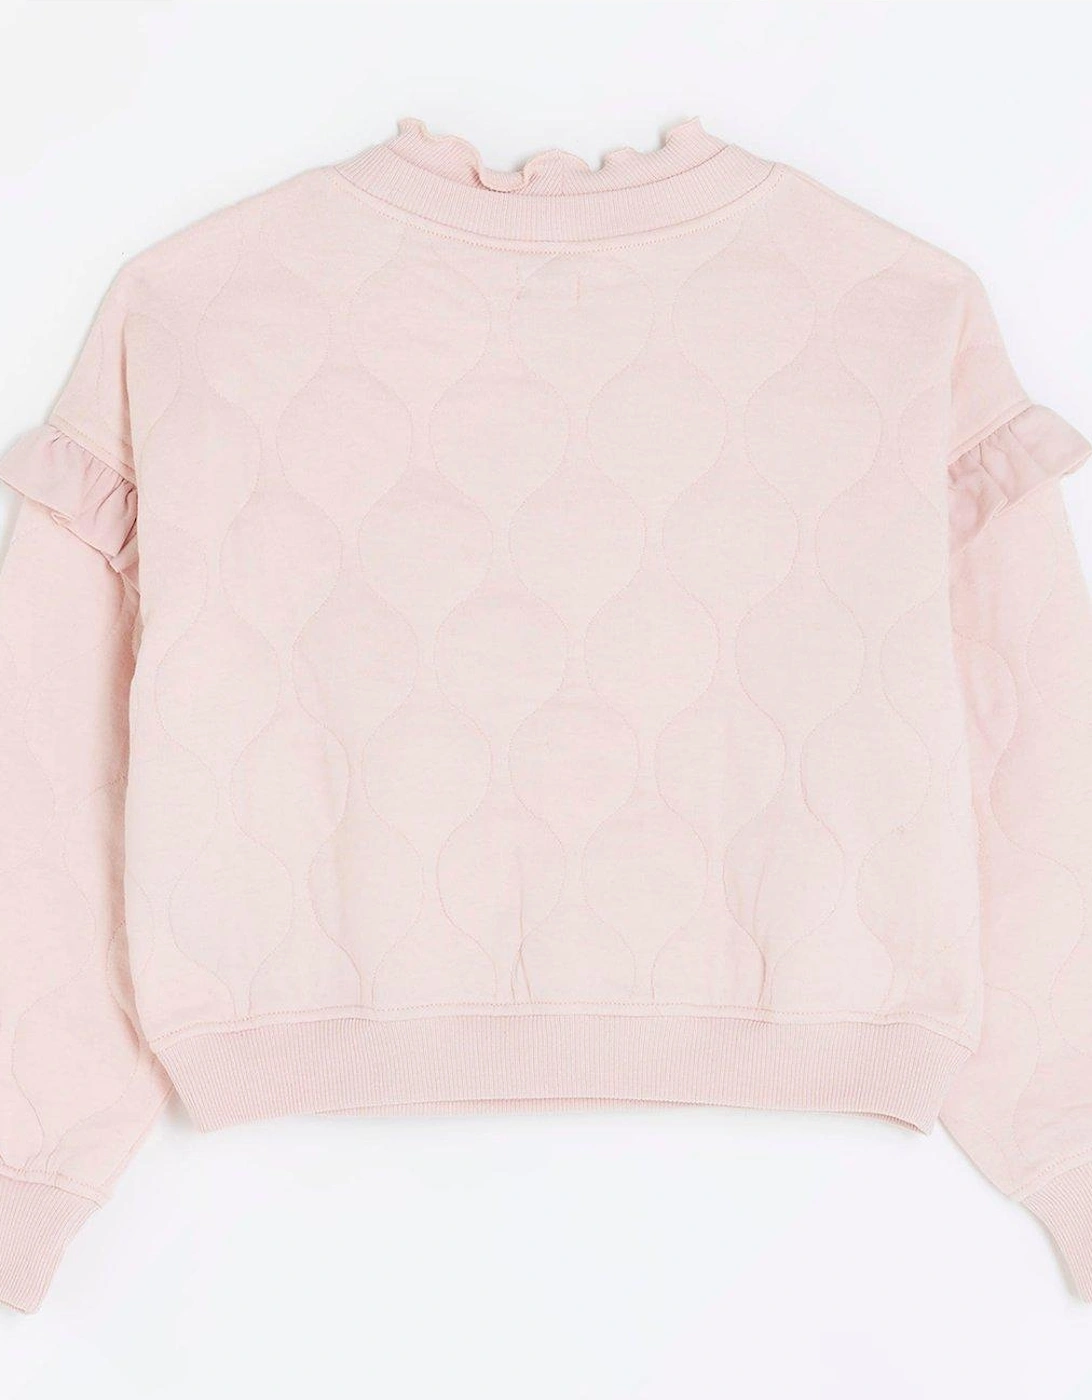 Girls Quilted Frill Sweatshirt - Pink